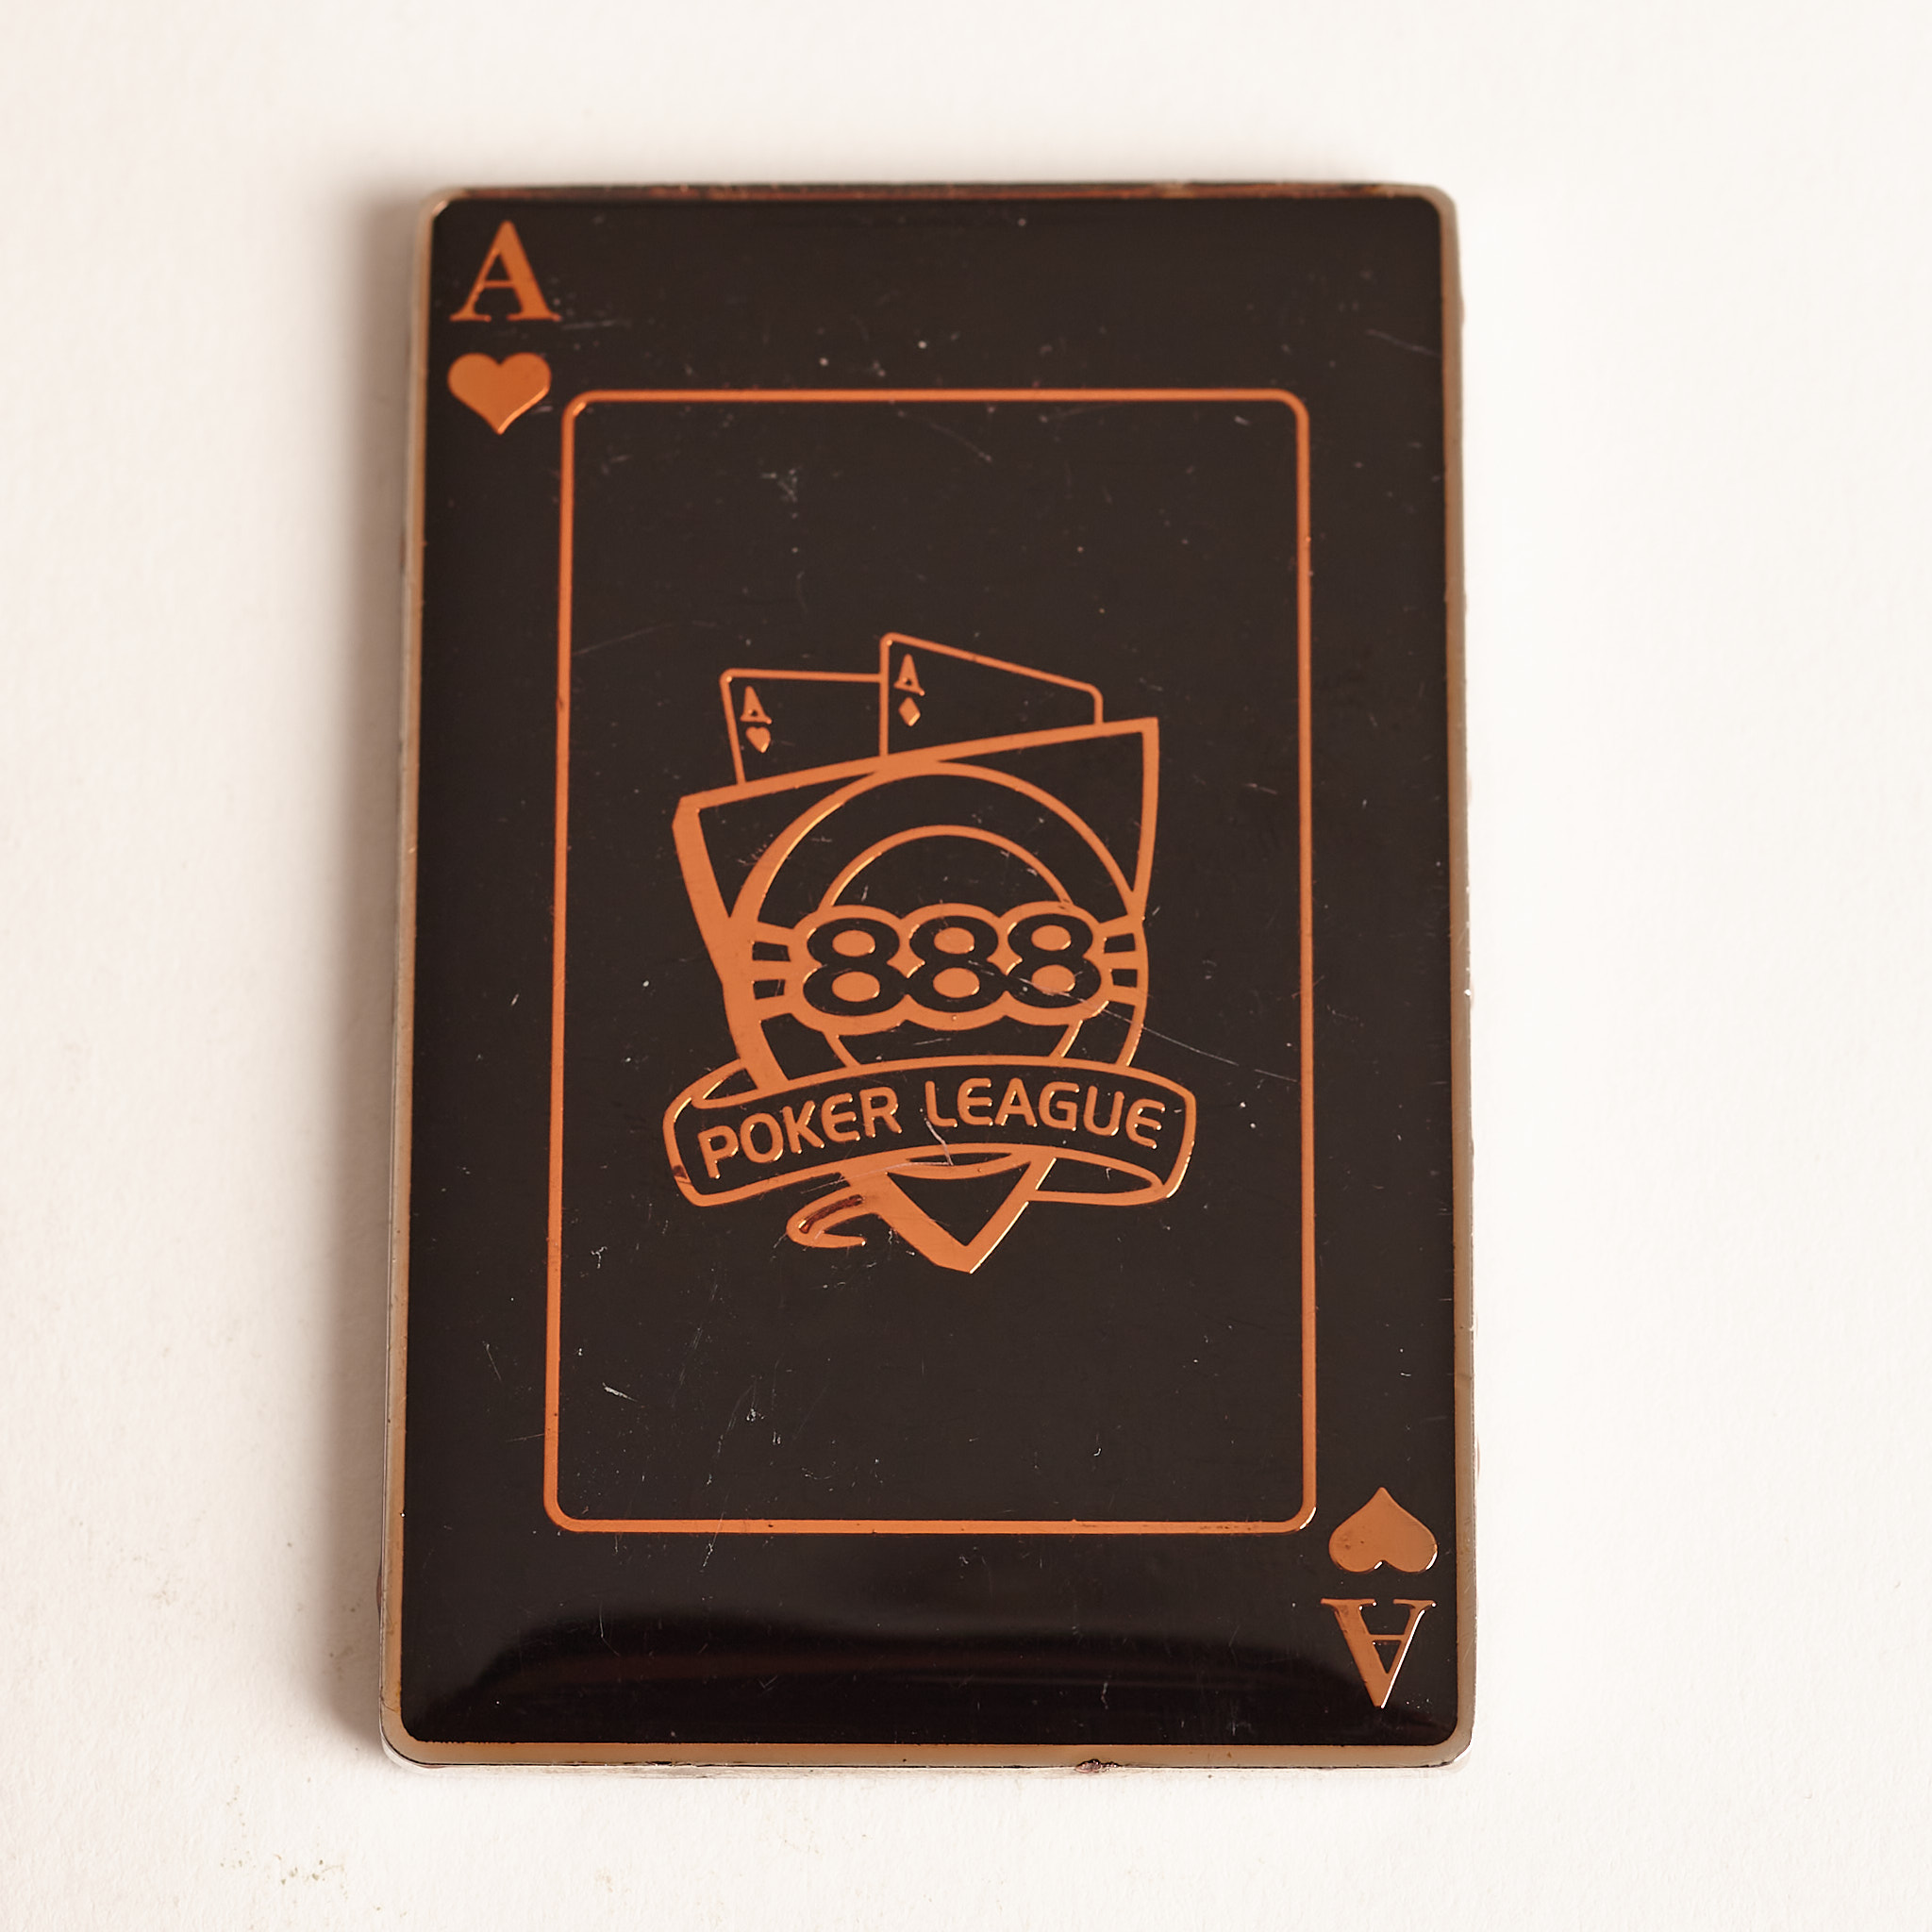 888 POKER LEAGUE, ACE HEARTS, TOURNAMENT WINNER, ROYAL FLUSH SERIES, Poker Card Guard